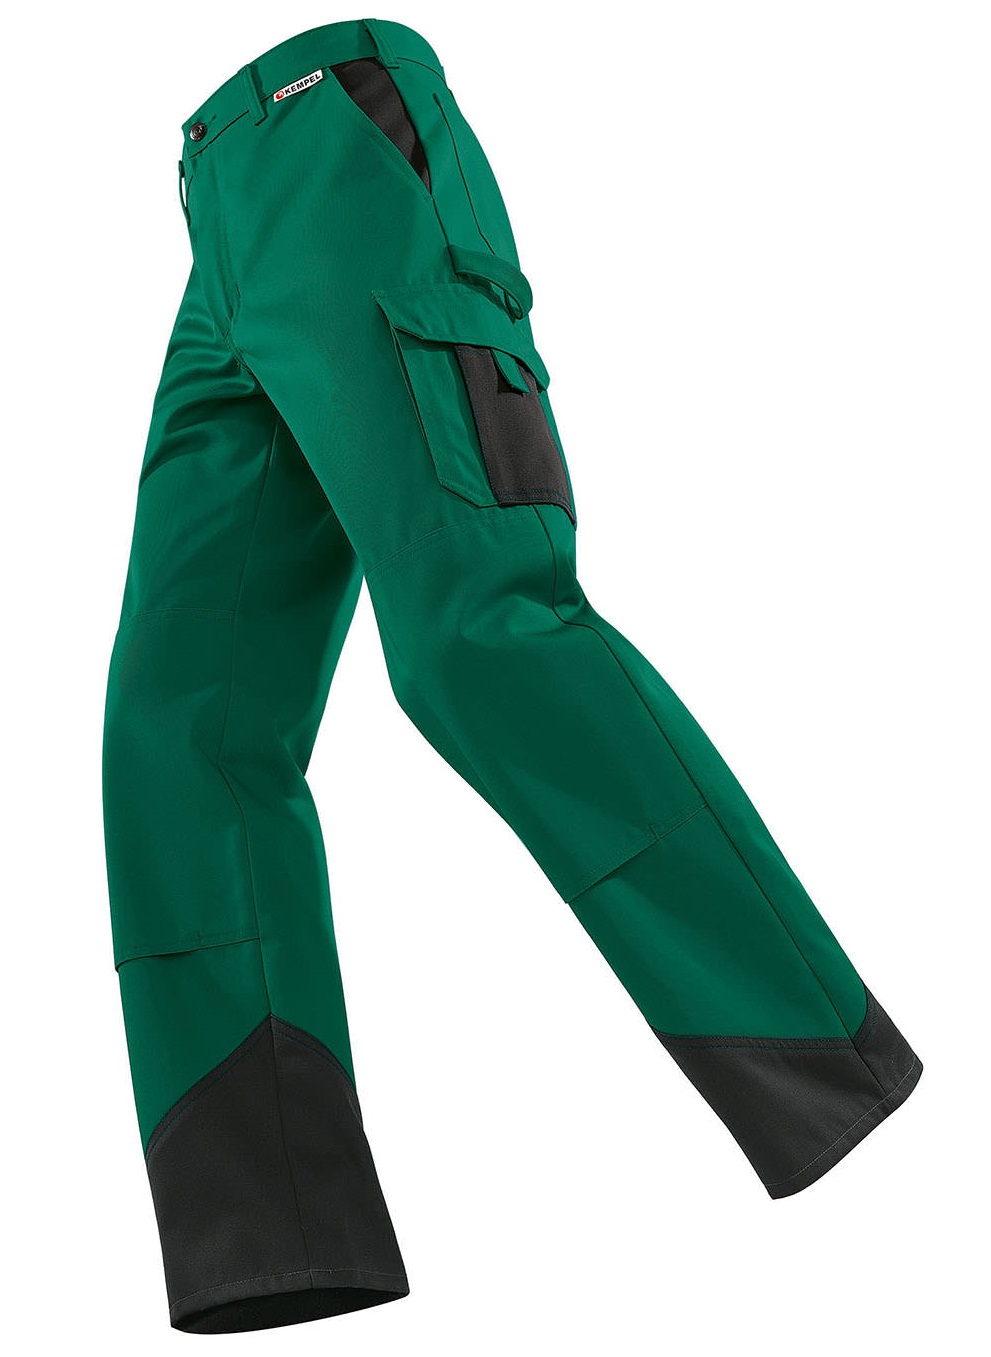 KEMPEL Bundhose Arbeitshose Berufshose Workerhose Arbeitskleidung Berufskleidung grün anthrazit ca 325g